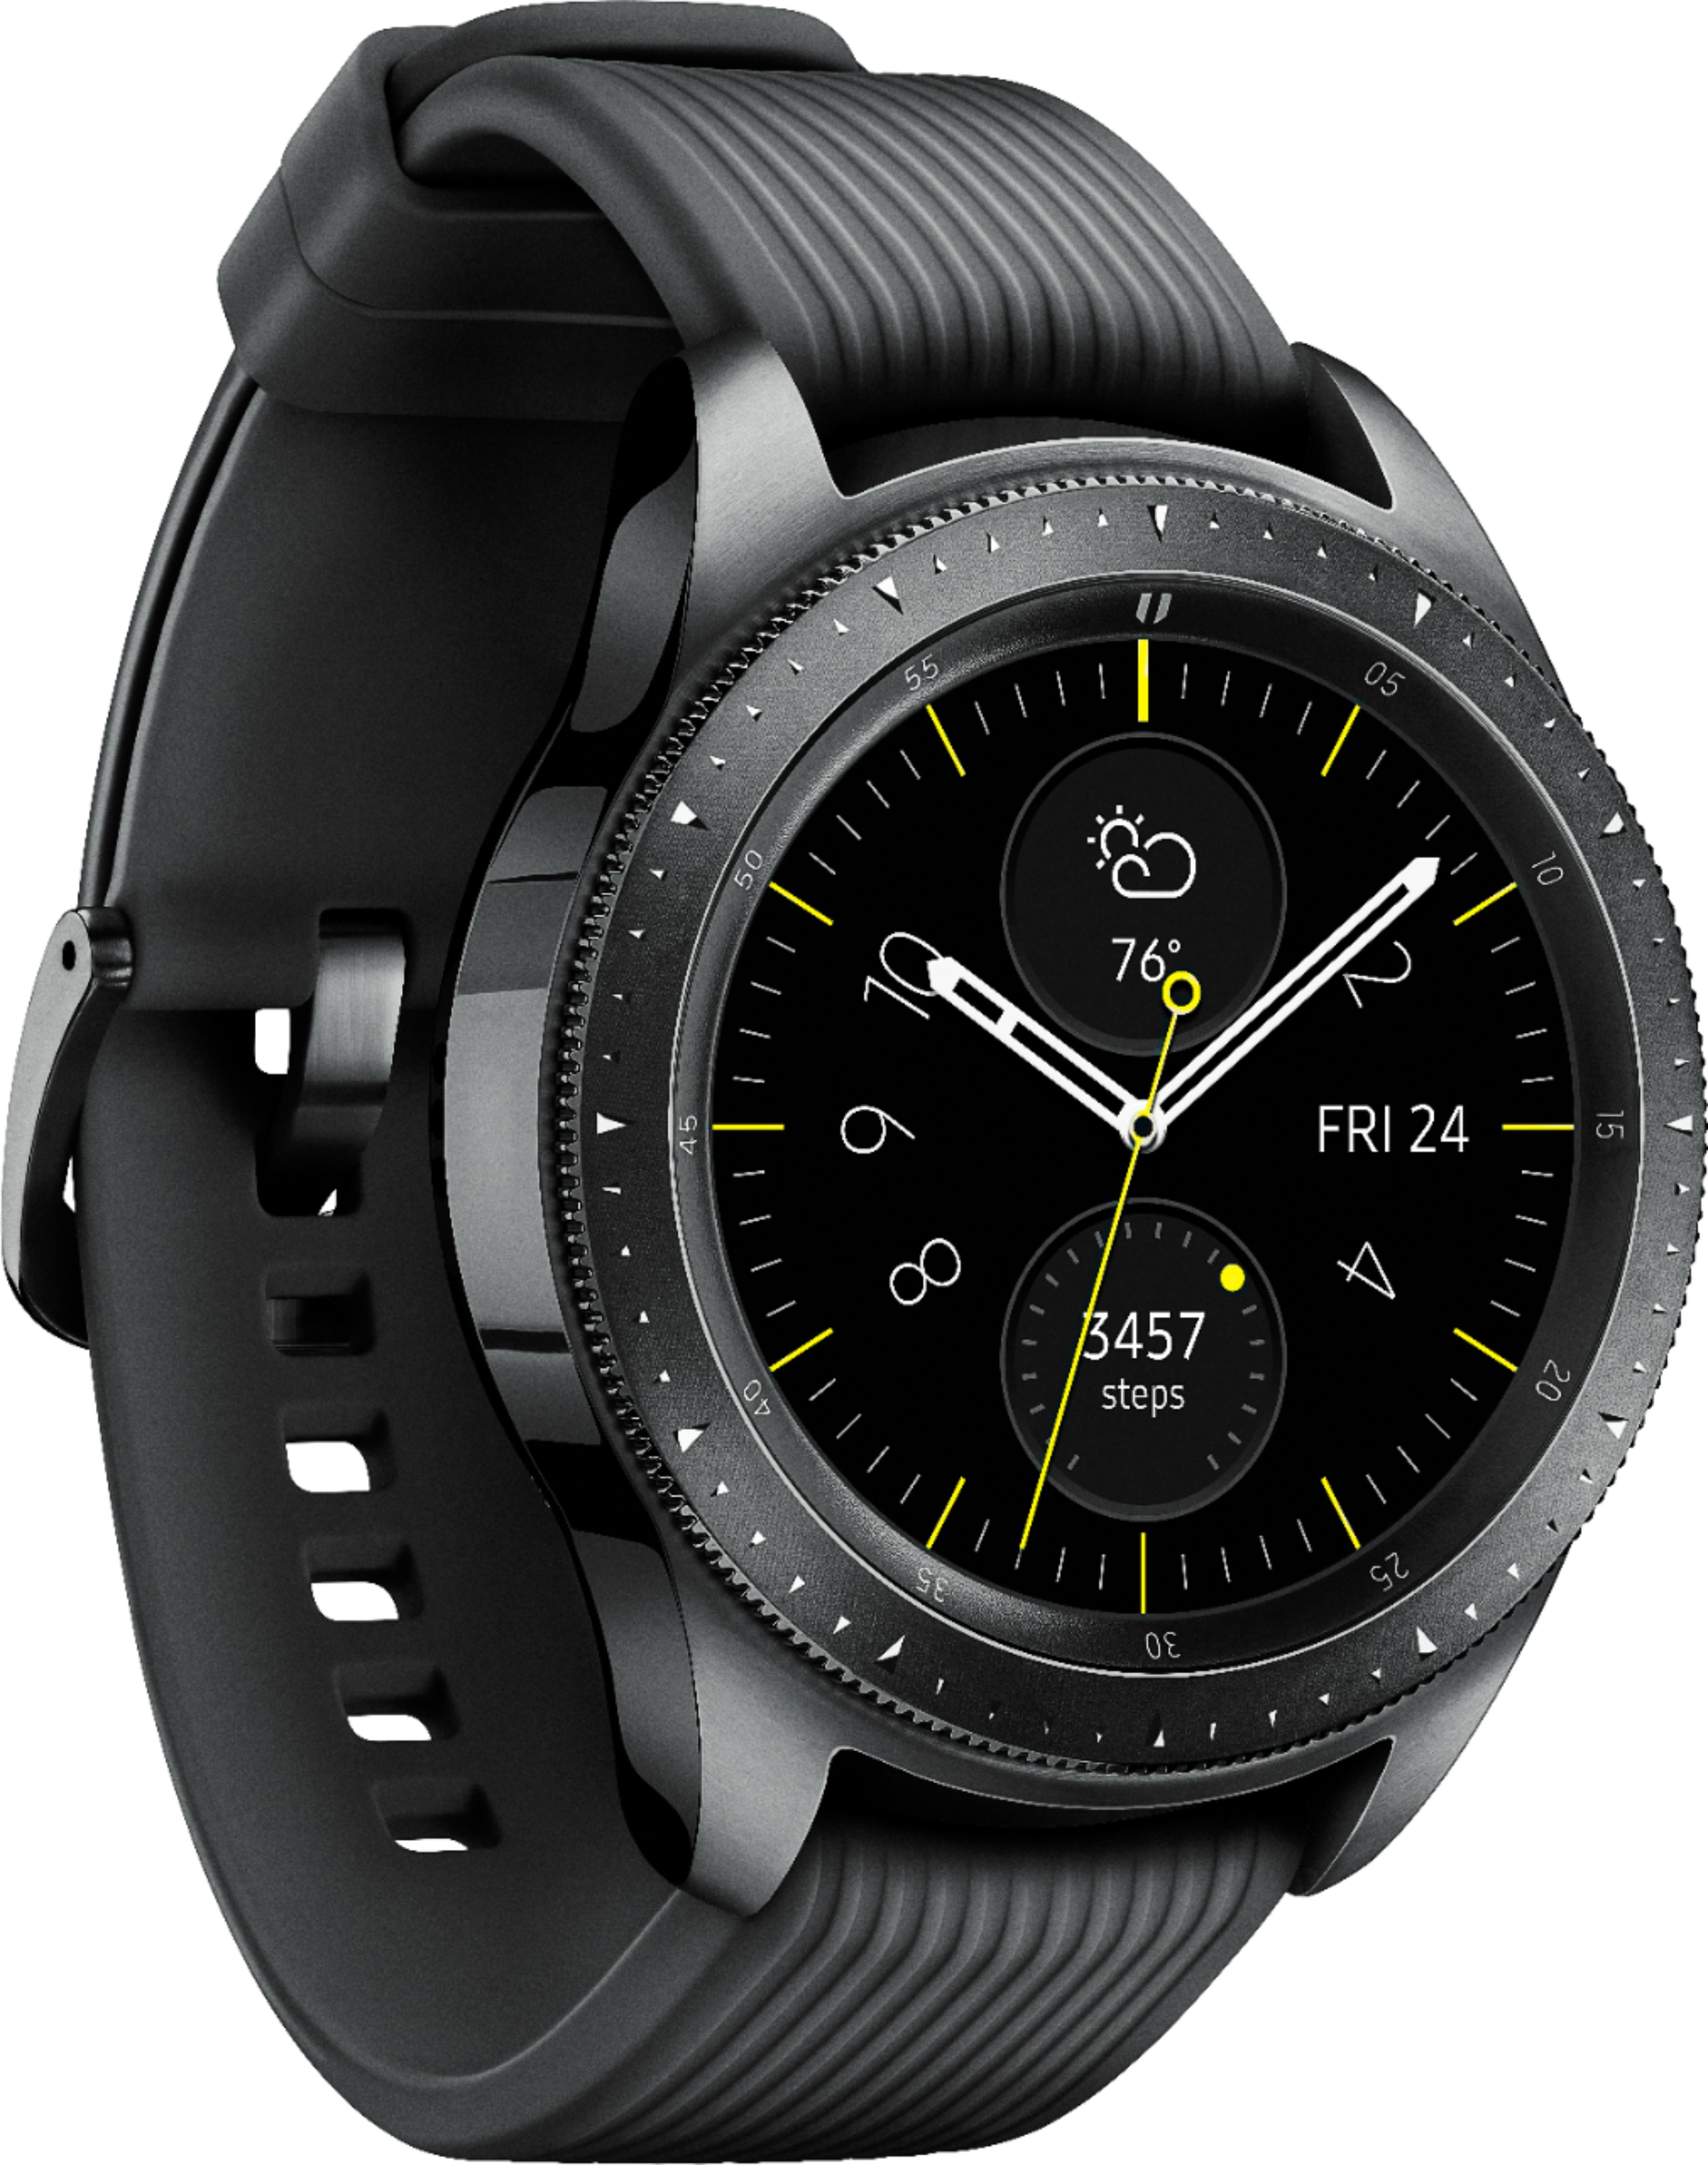 Angle View: Samsung - Galaxy Watch Smartwatch 42mm Stainless Steel LTE (unlocked) - Midnight Black